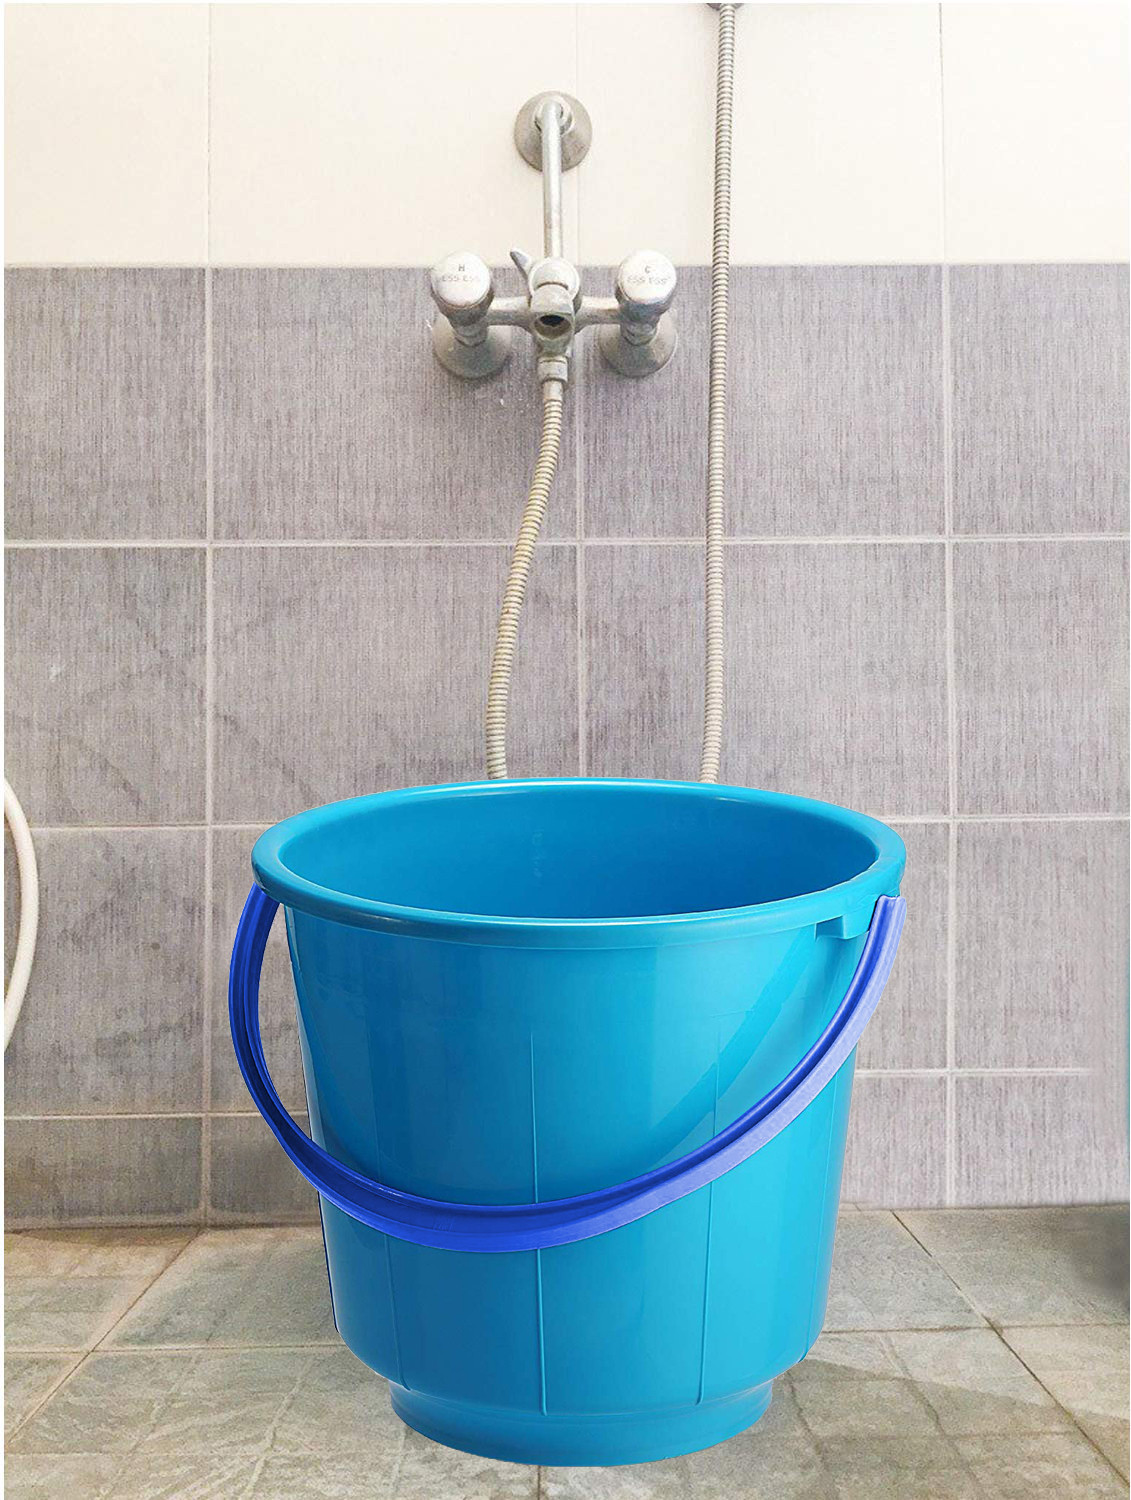 Kuber Industries Unbreakable Strong Plastic Bathroom Bucket 13 Ltr (Green & Pink & Blue) -CTKTC37927